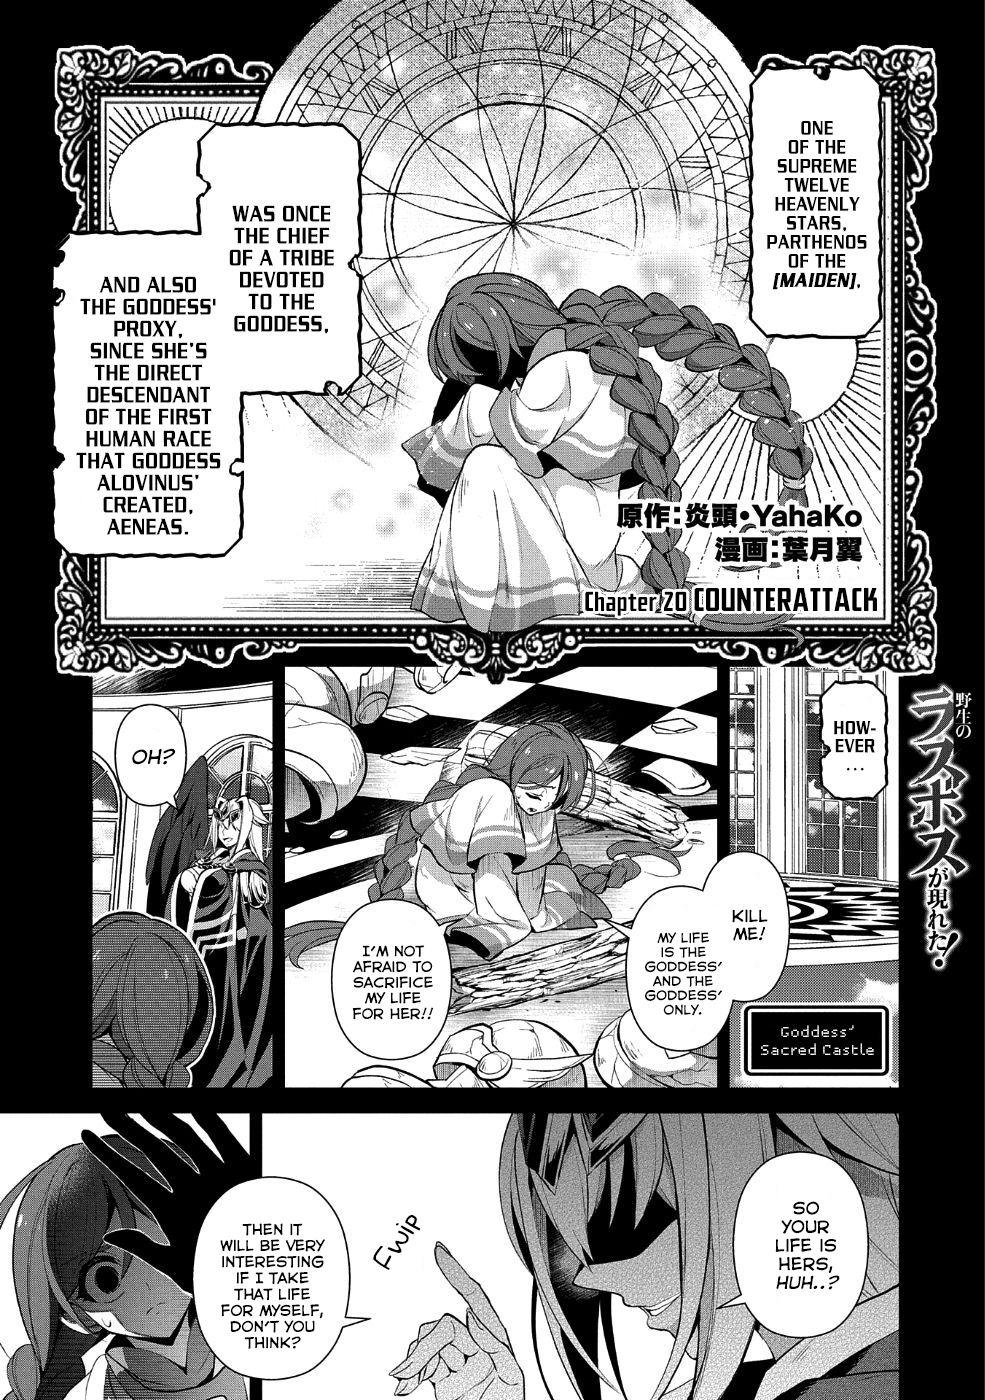 Yasei No Last Boss Ga Arawareta! - Page 2